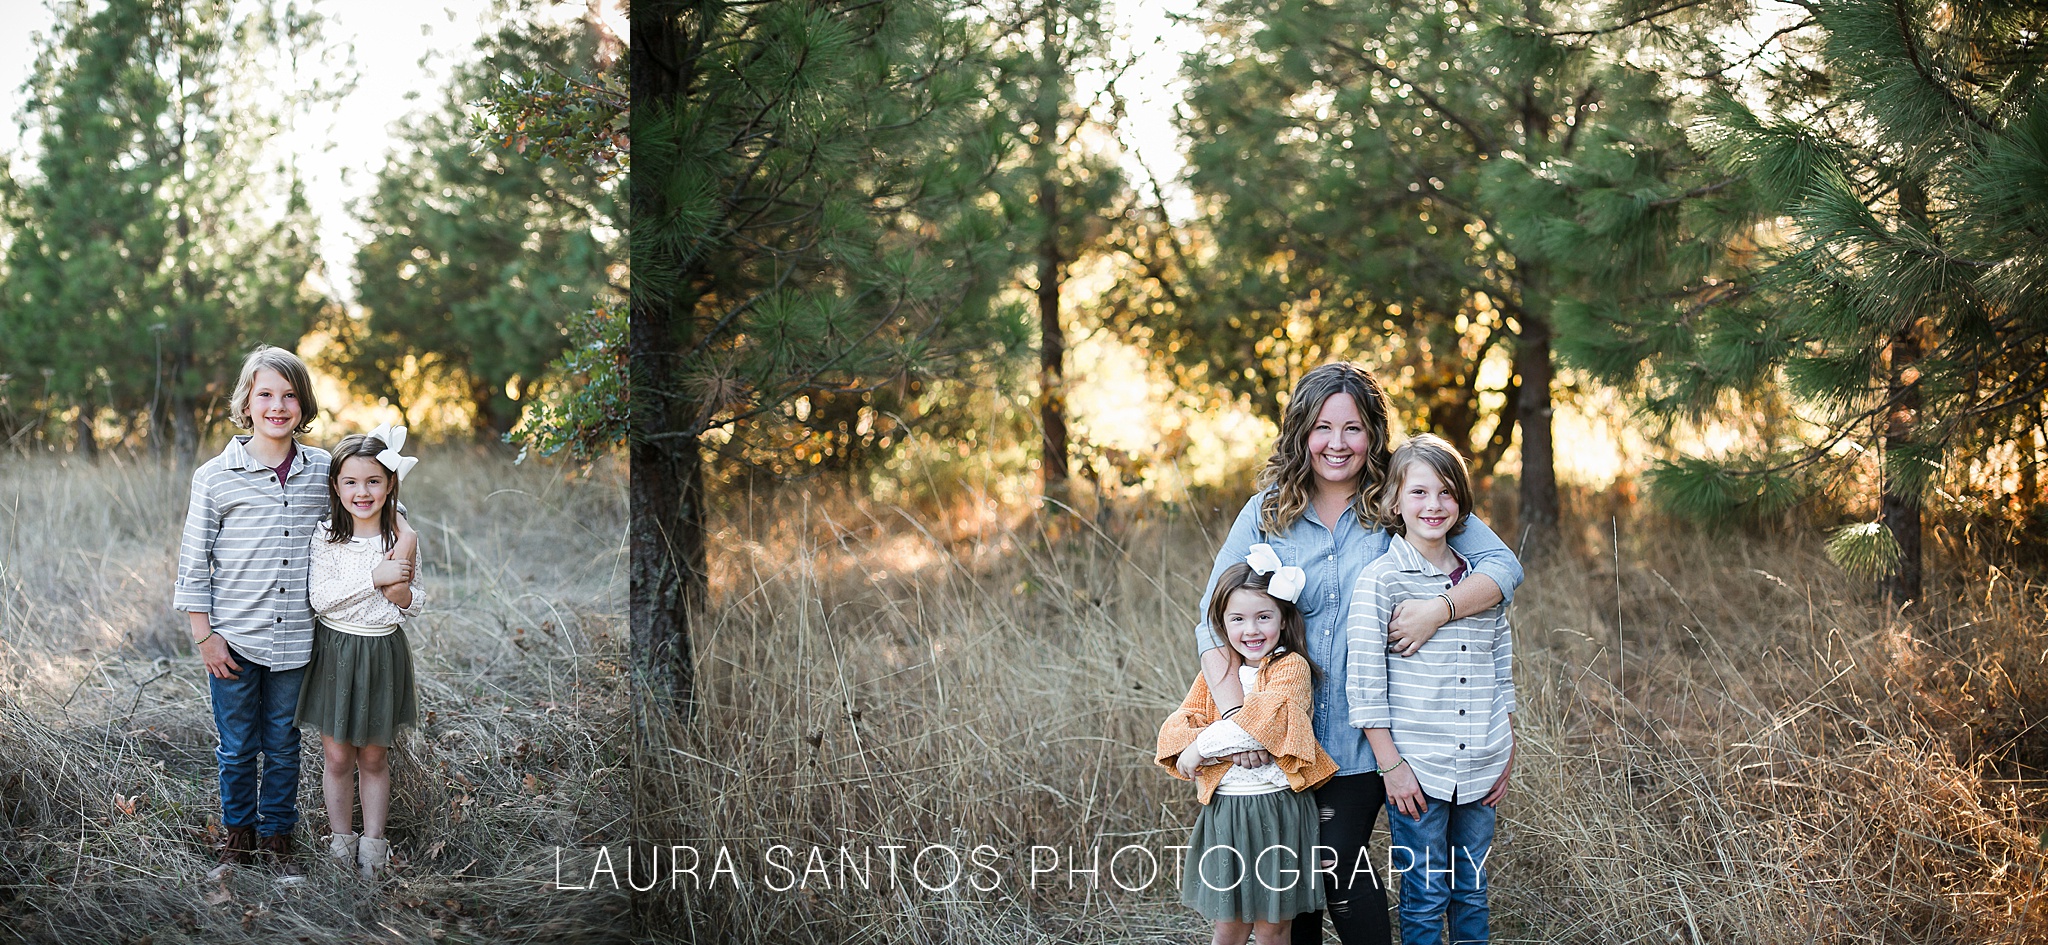 Laura Santos Photography Portland Oregon Family Photographer_0899.jpg